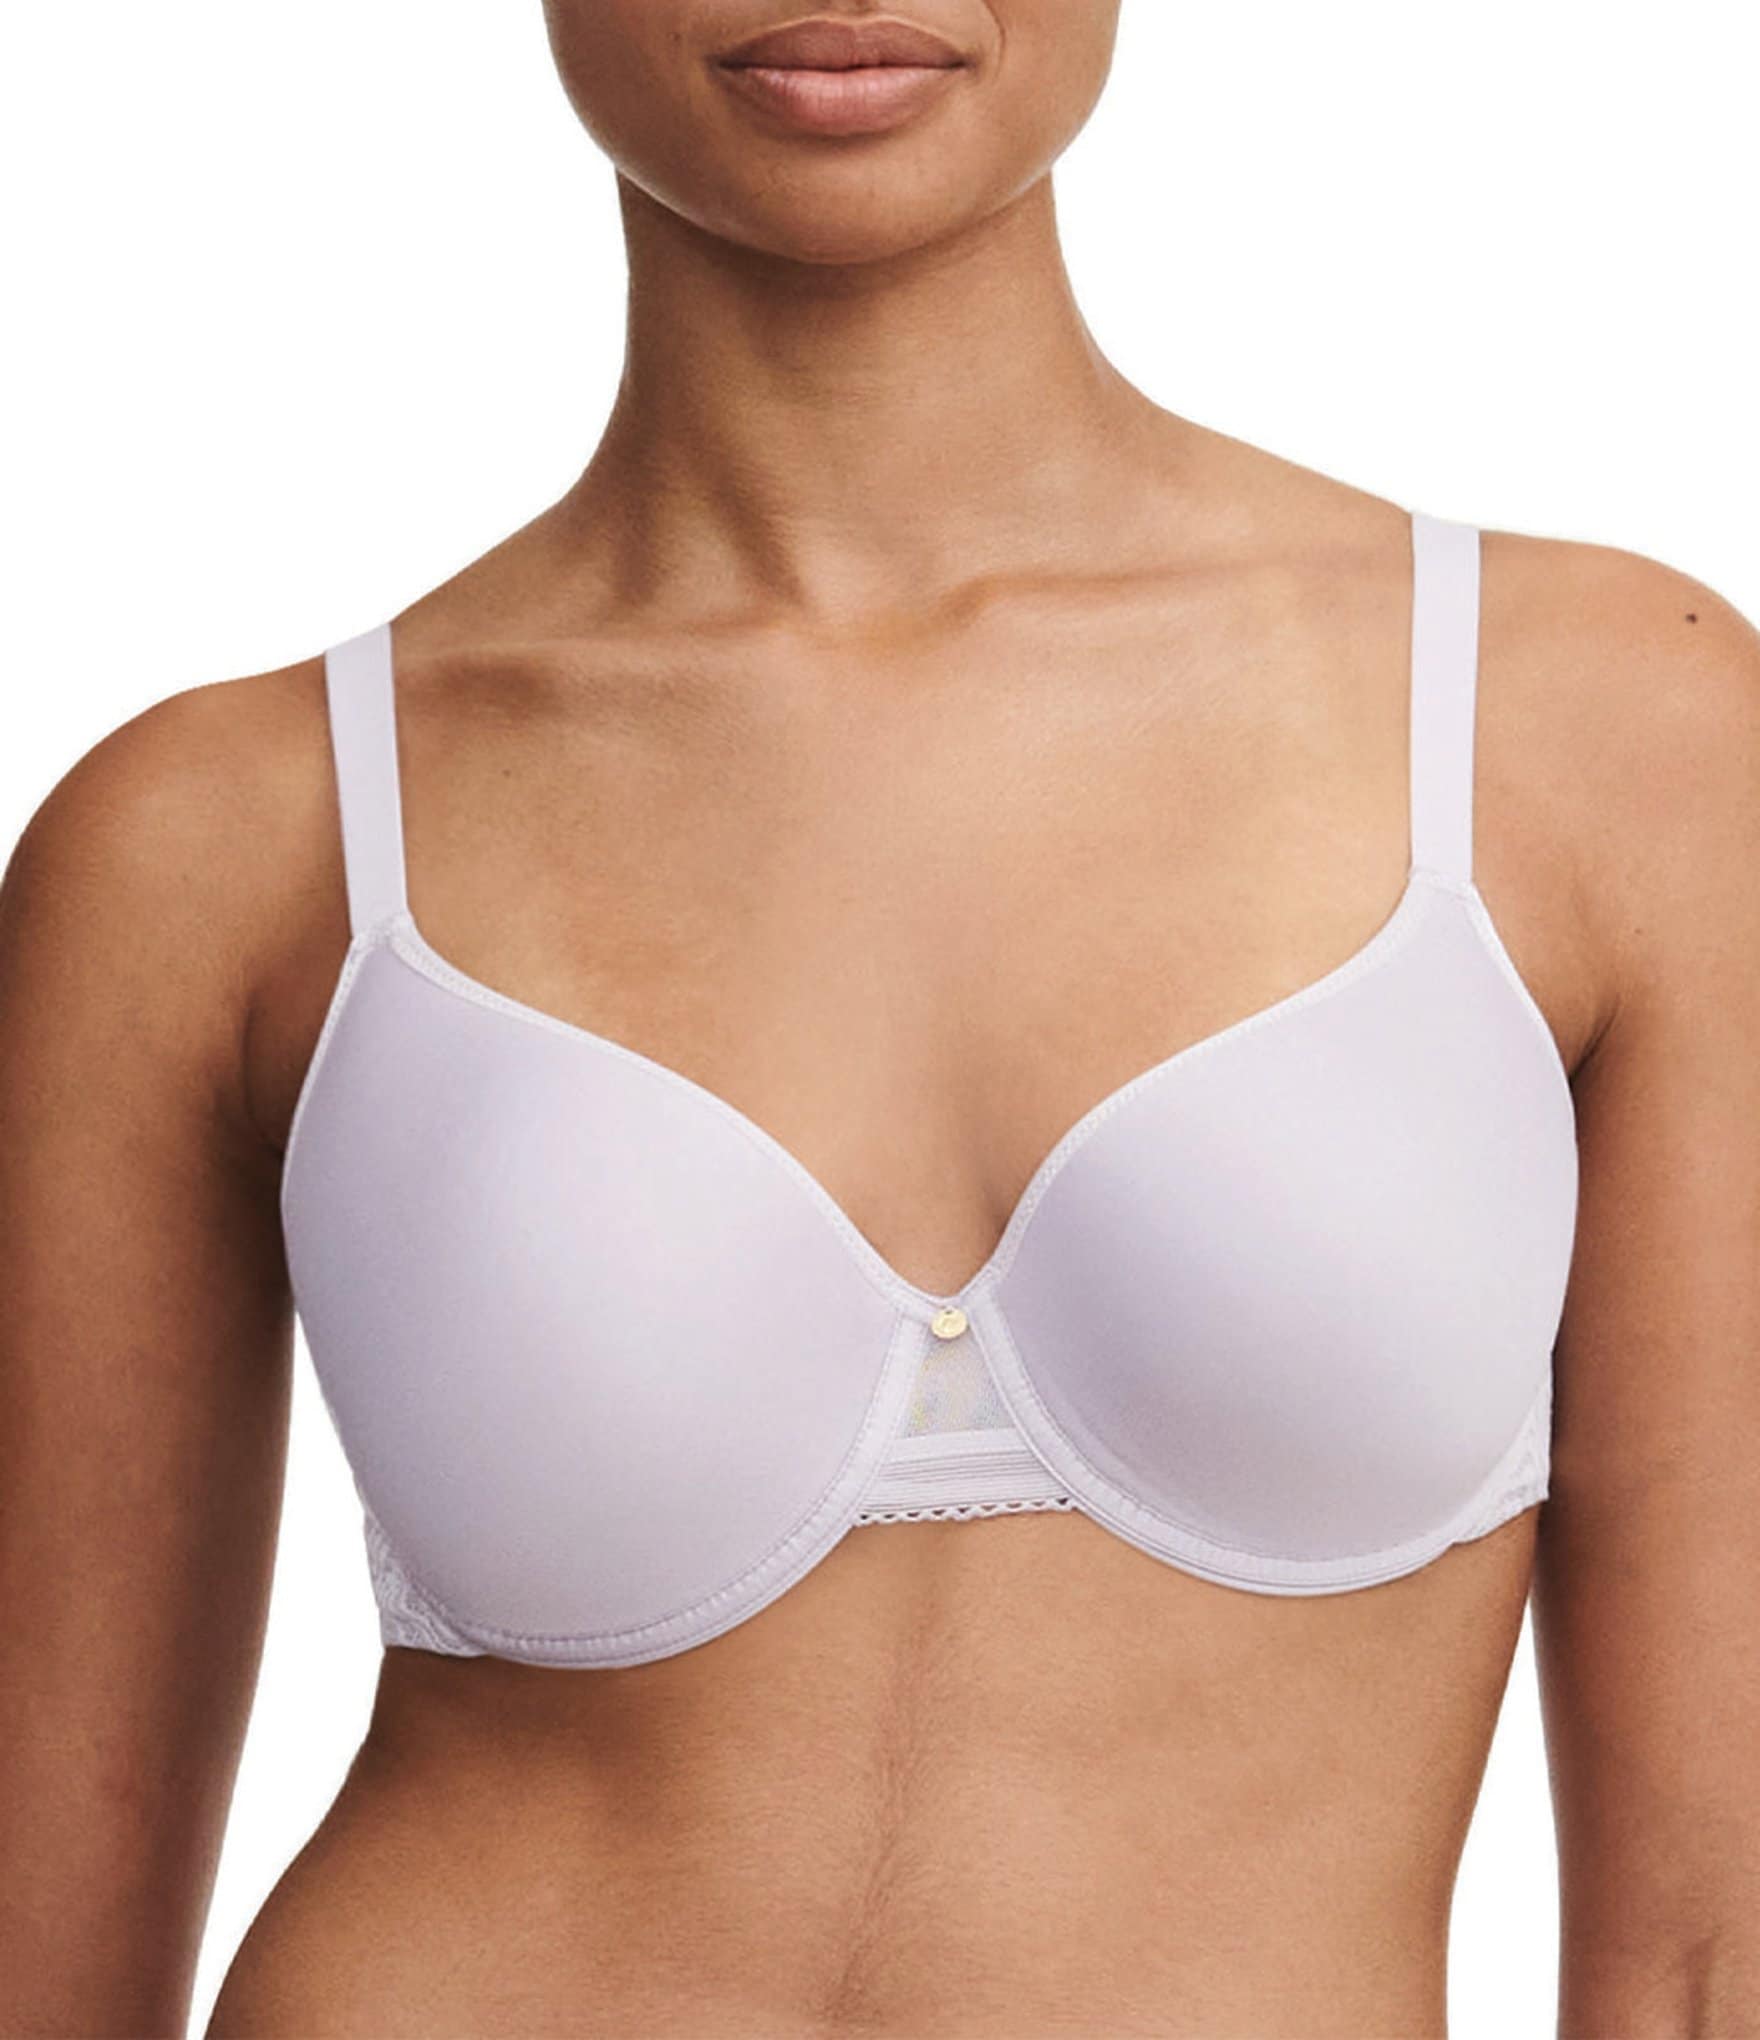 Wholesale undergarments - Foam bra Size 36 to 42 Rs 2400